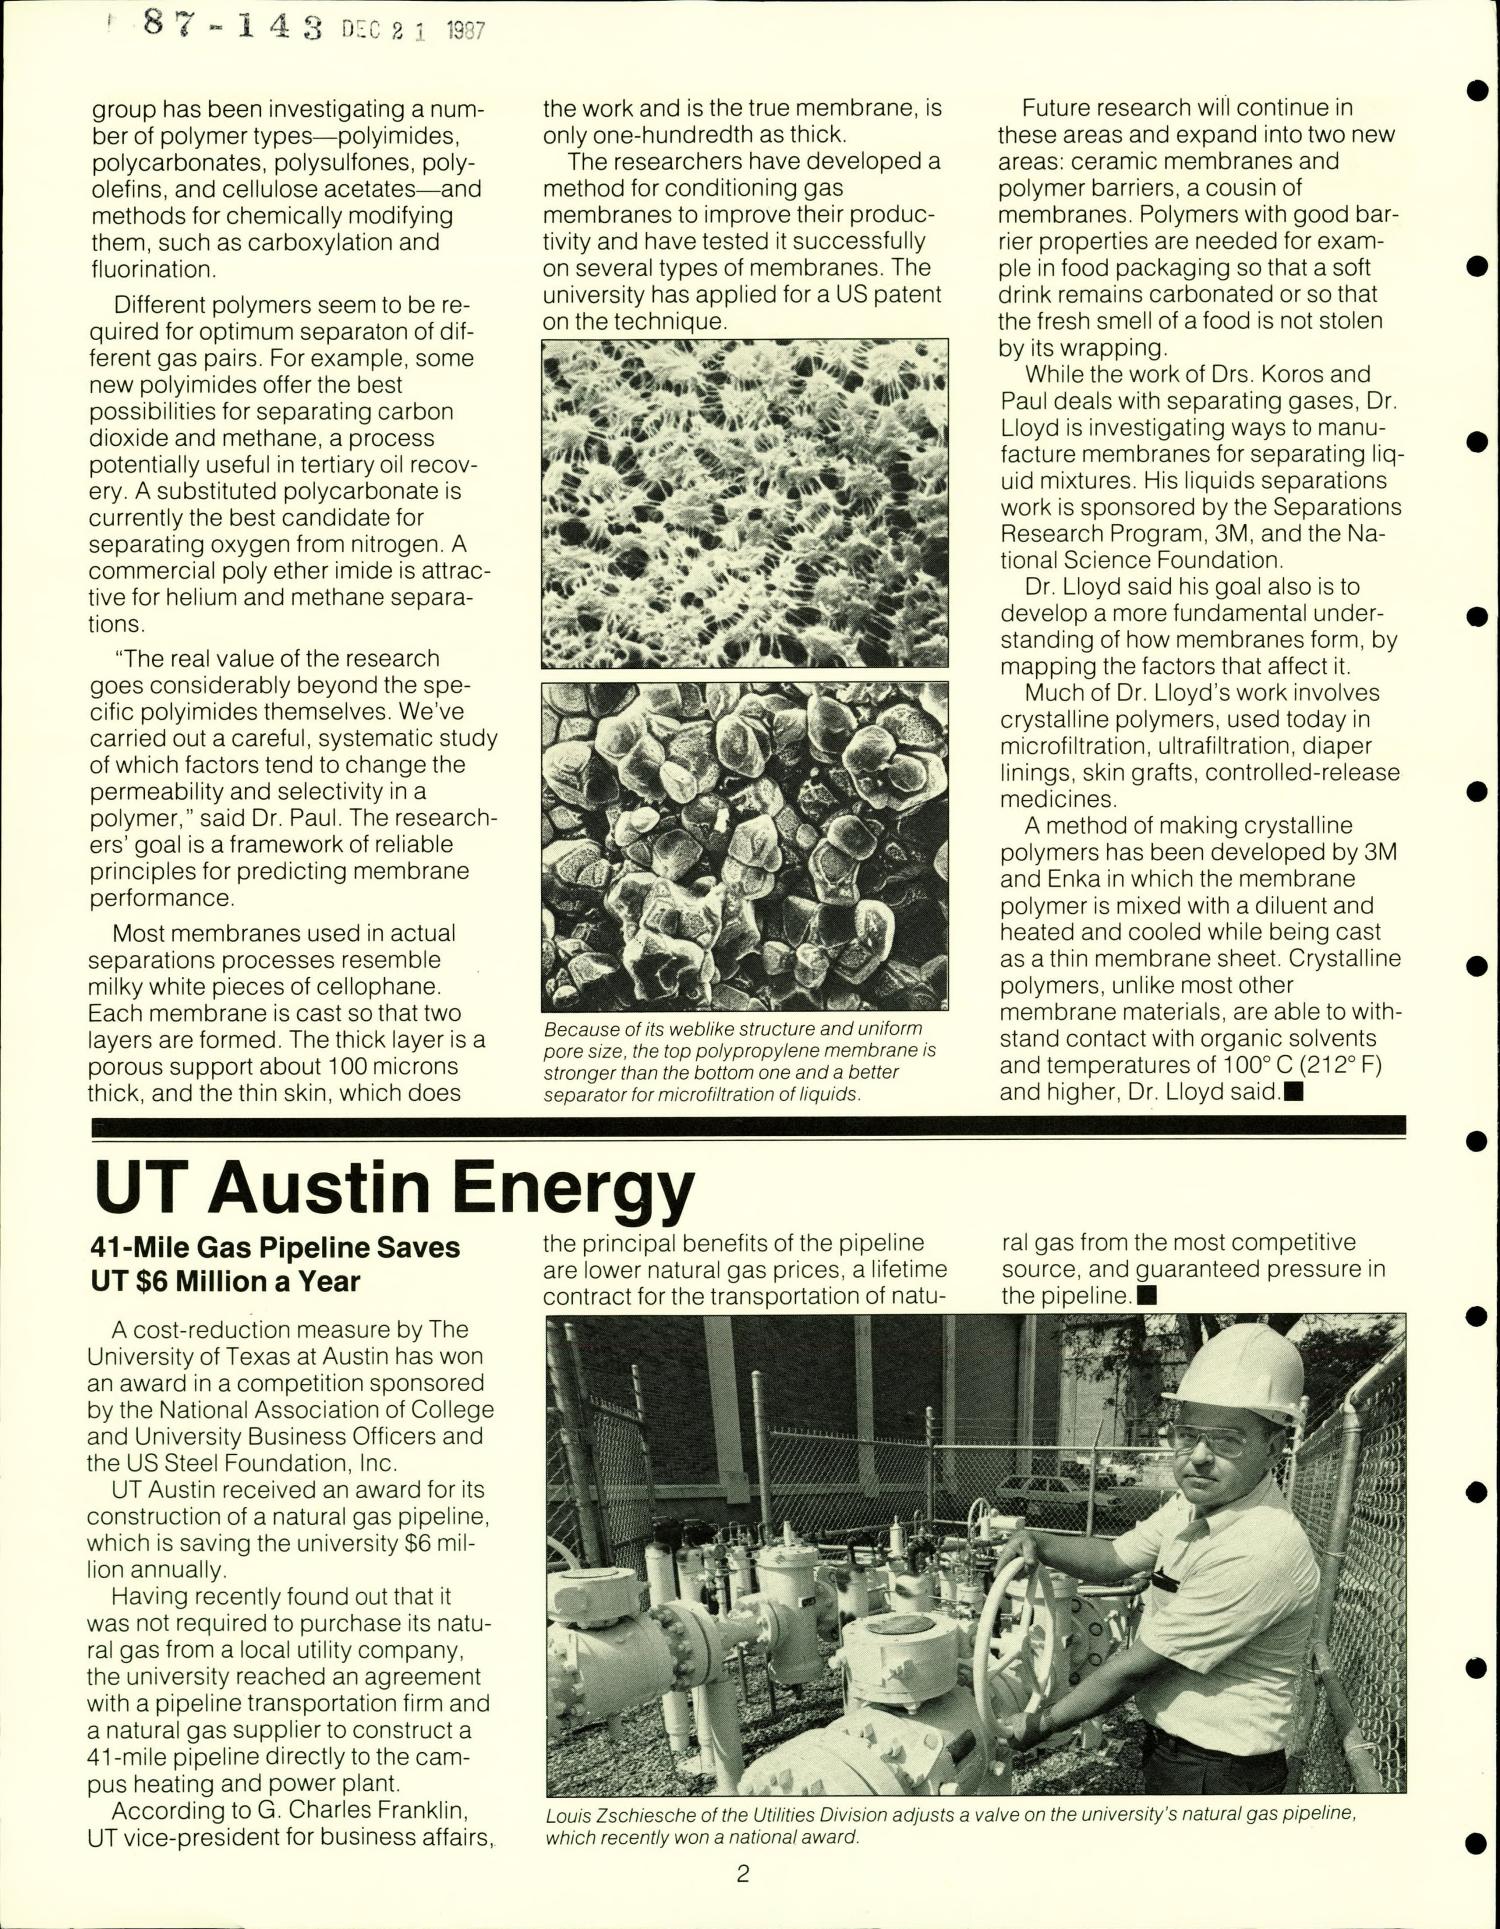 Energy Studies, Volume 13, Number 2, November/December 1987
                                                
                                                    2
                                                